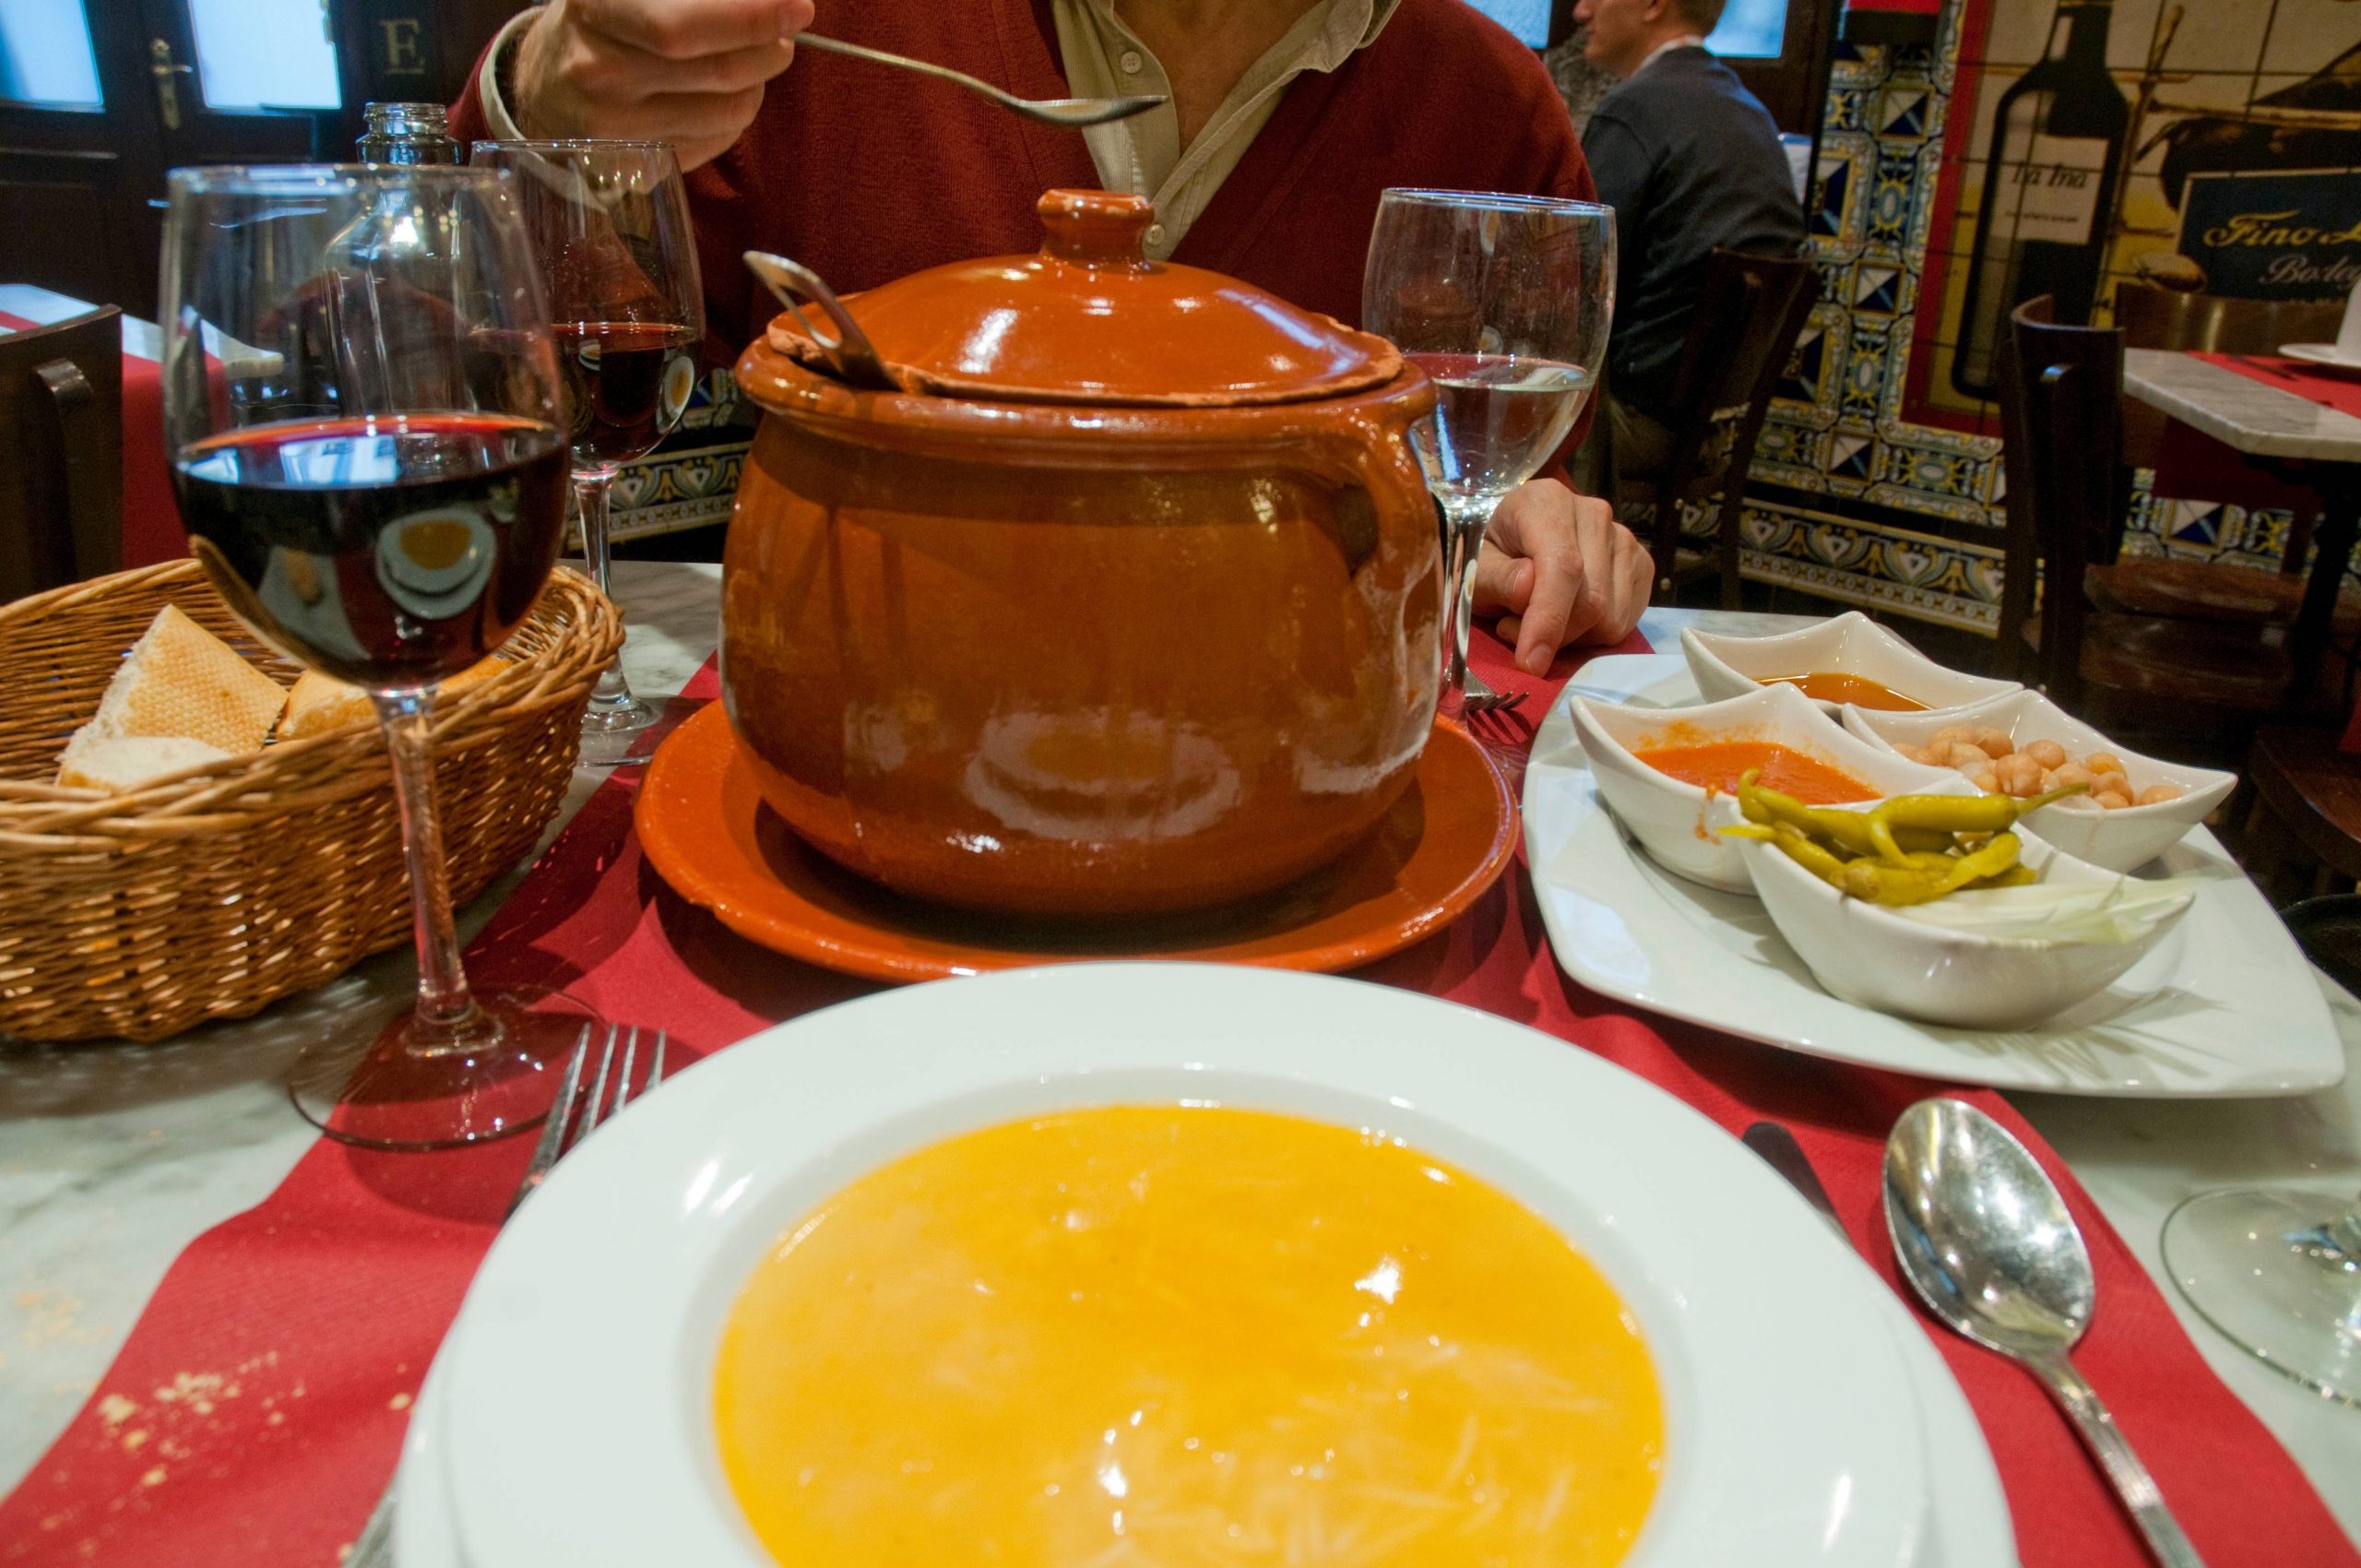 Half-price meal offer starts in Alicante City restaurants in Spain thanks to new dining voucher scheme